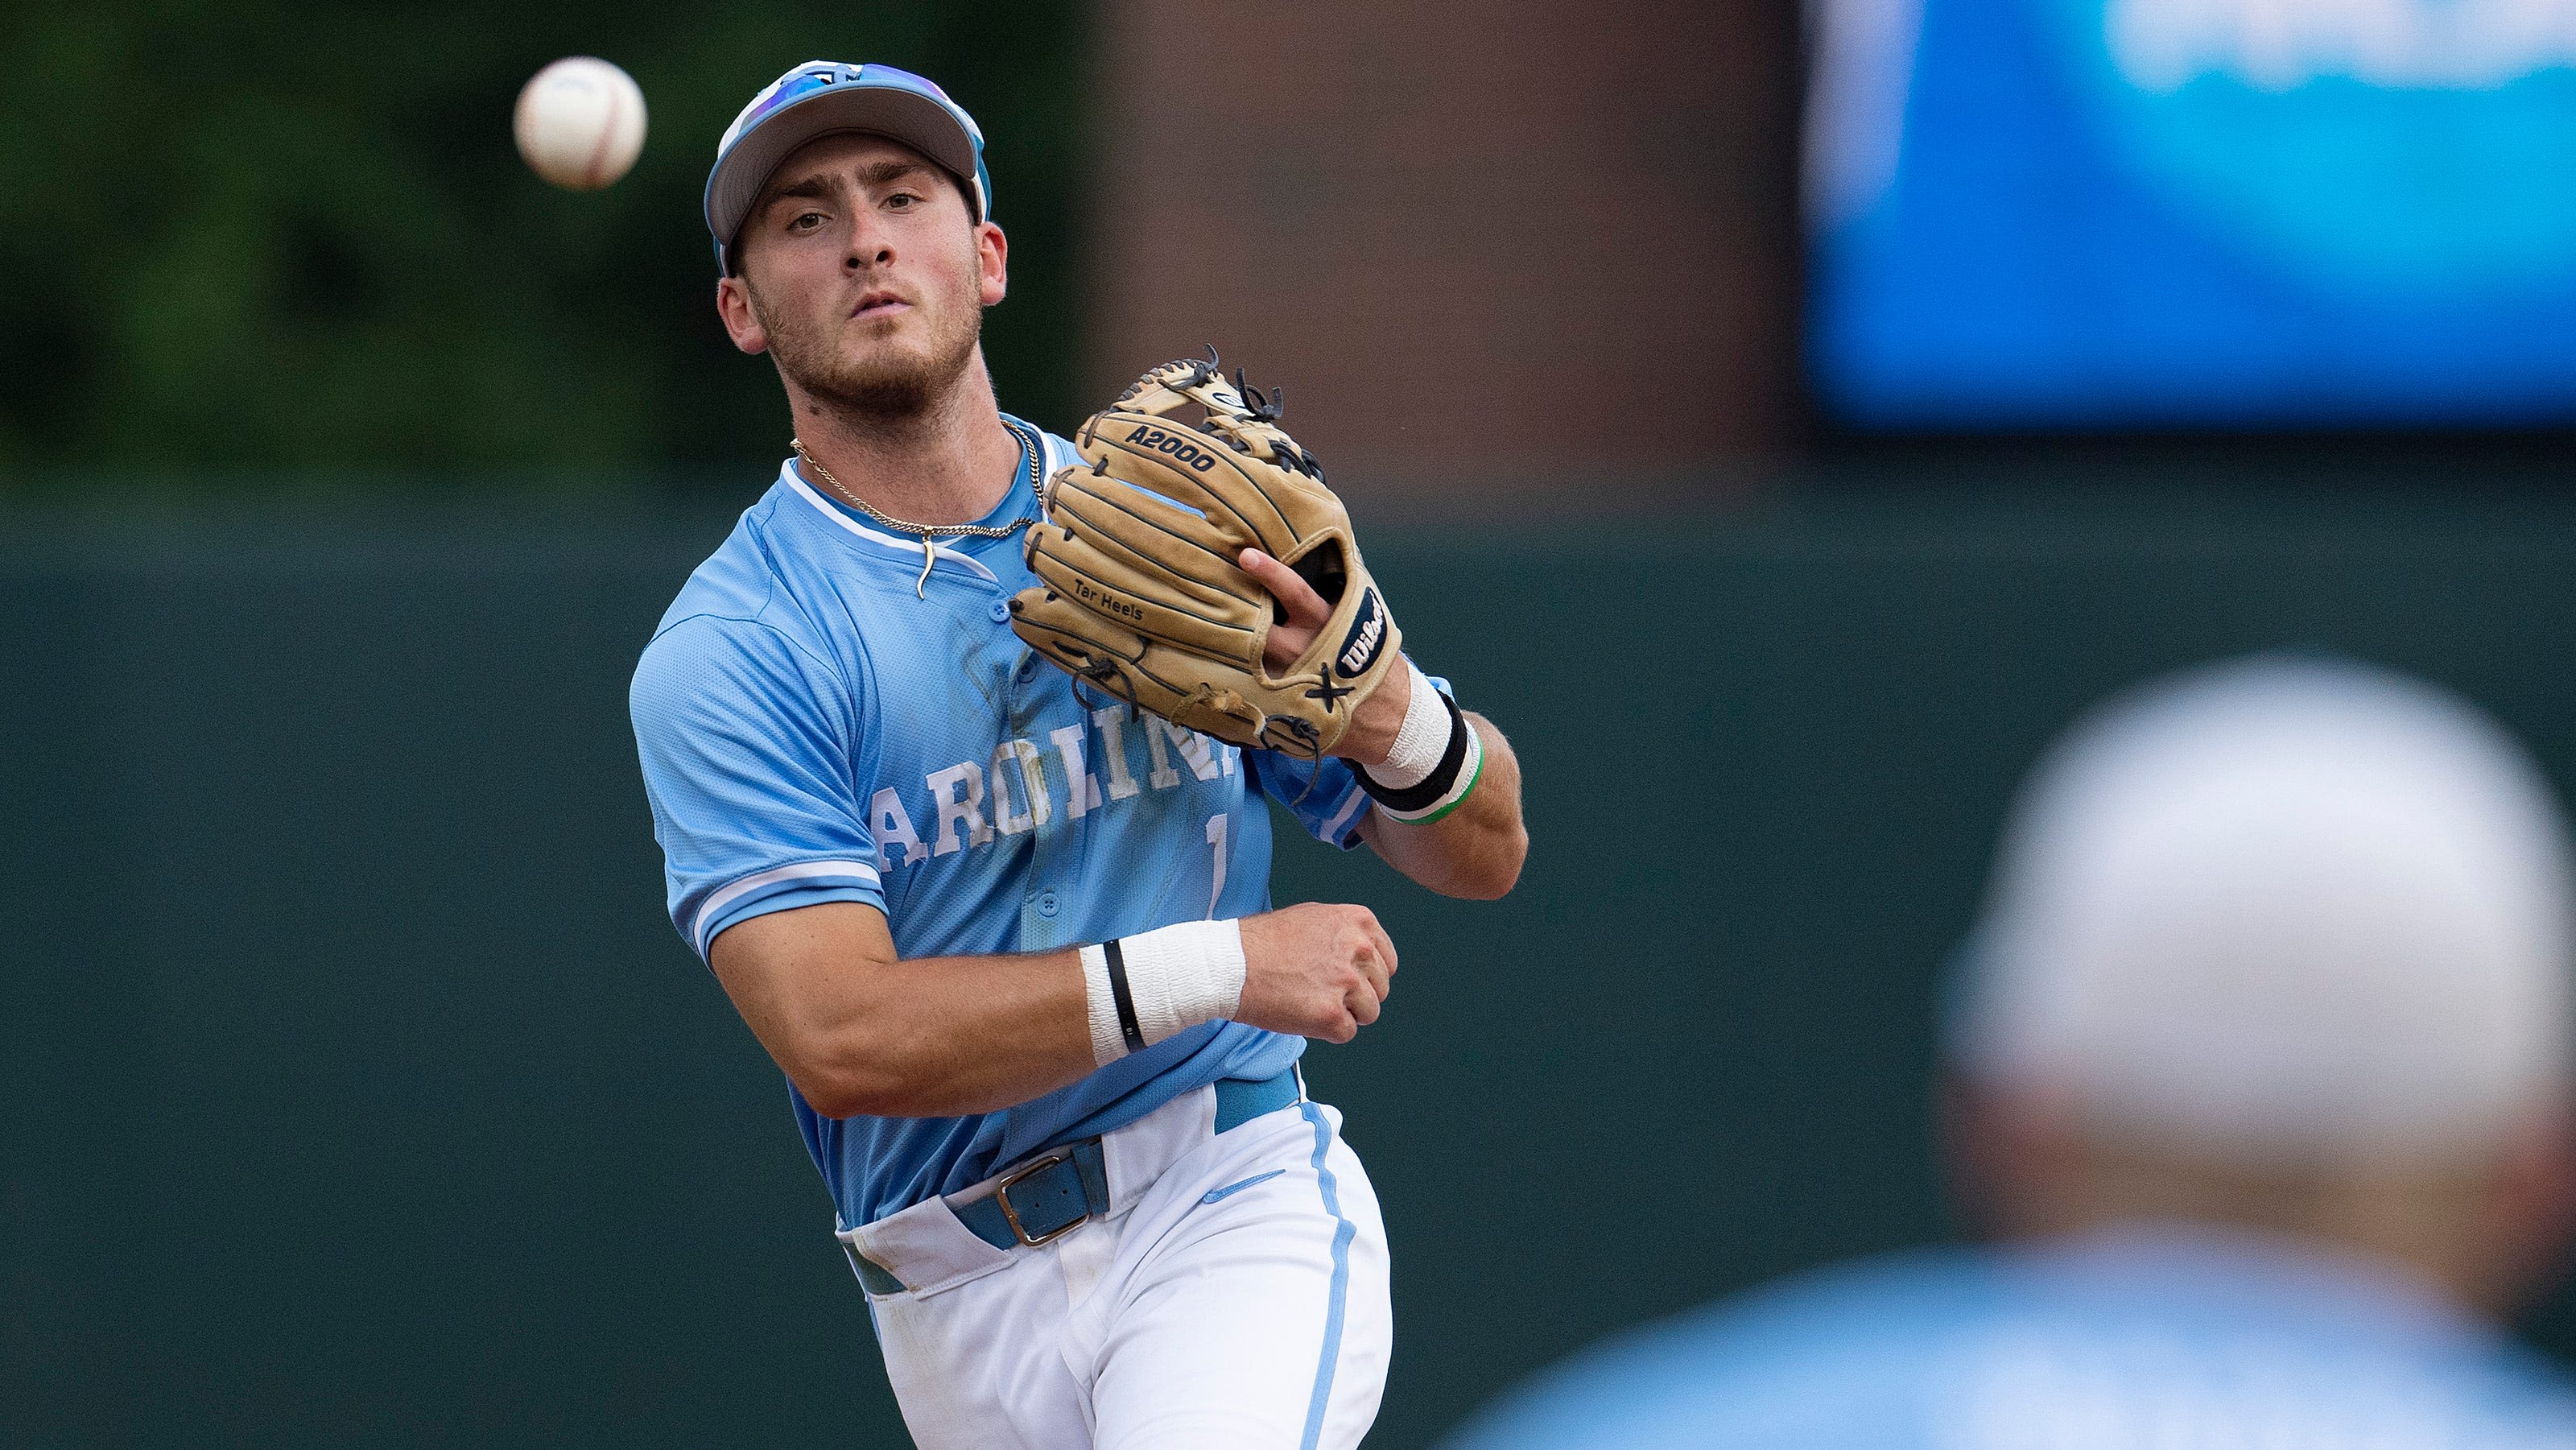 UNC baseball vs West Virginia score, updates, highlights from Chapel Hill Super Regional